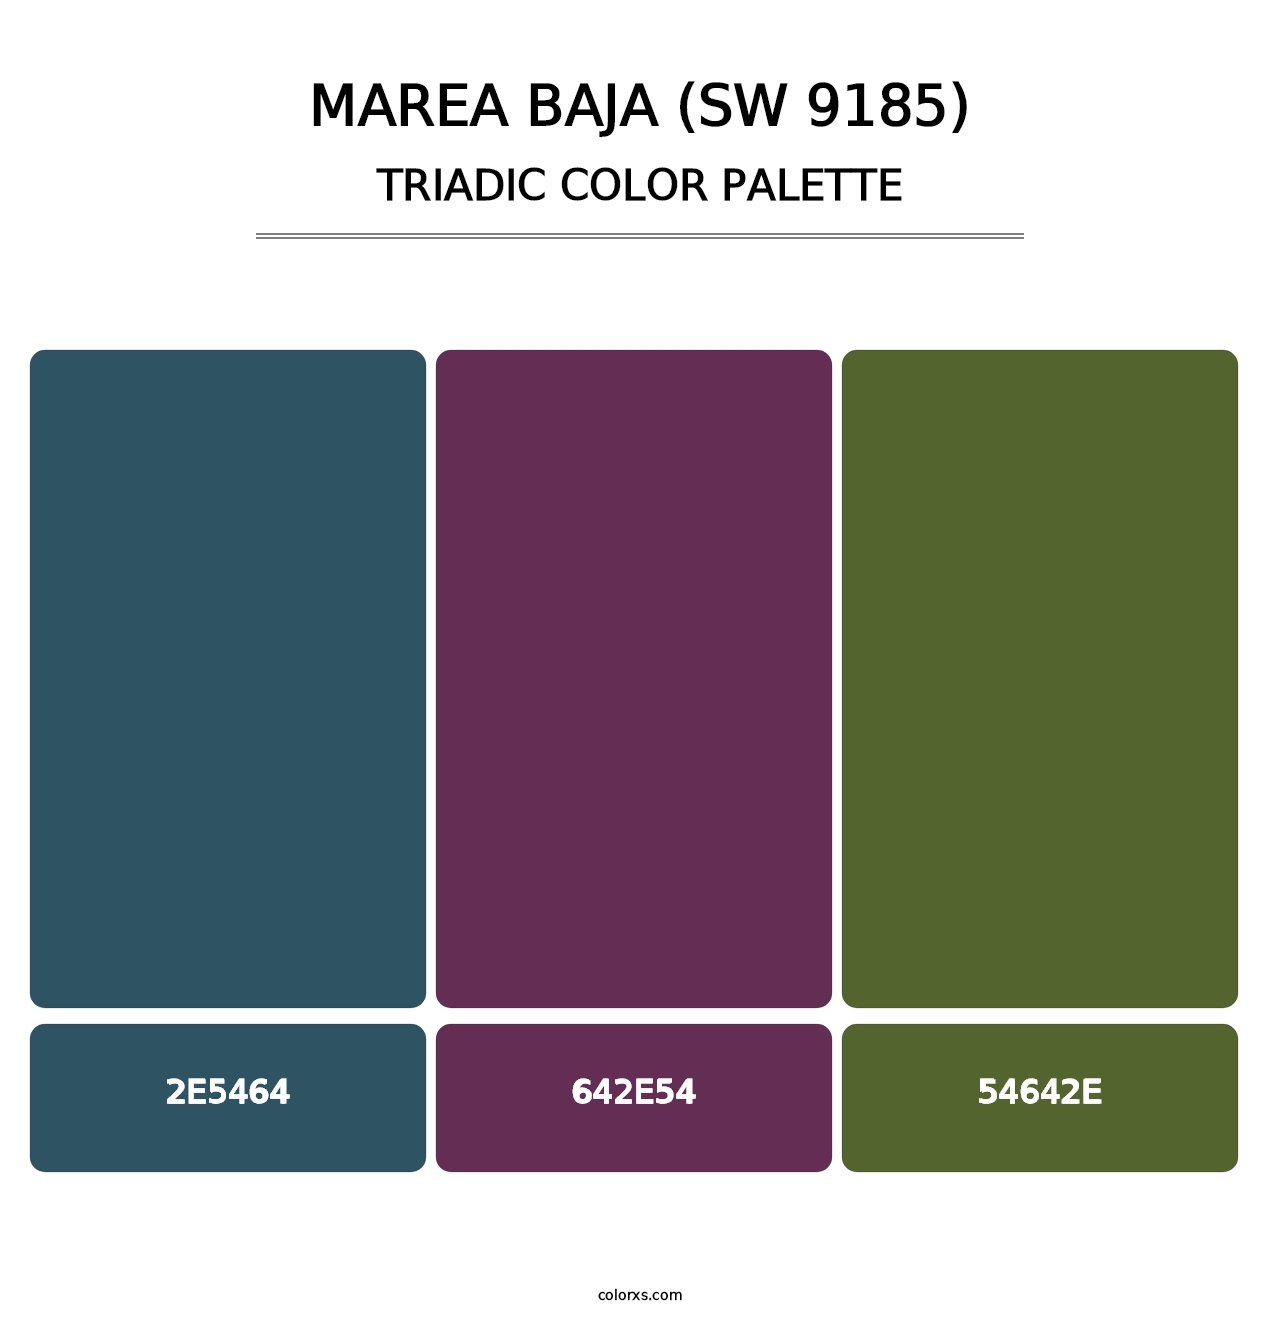 Marea Baja (SW 9185) - Triadic Color Palette